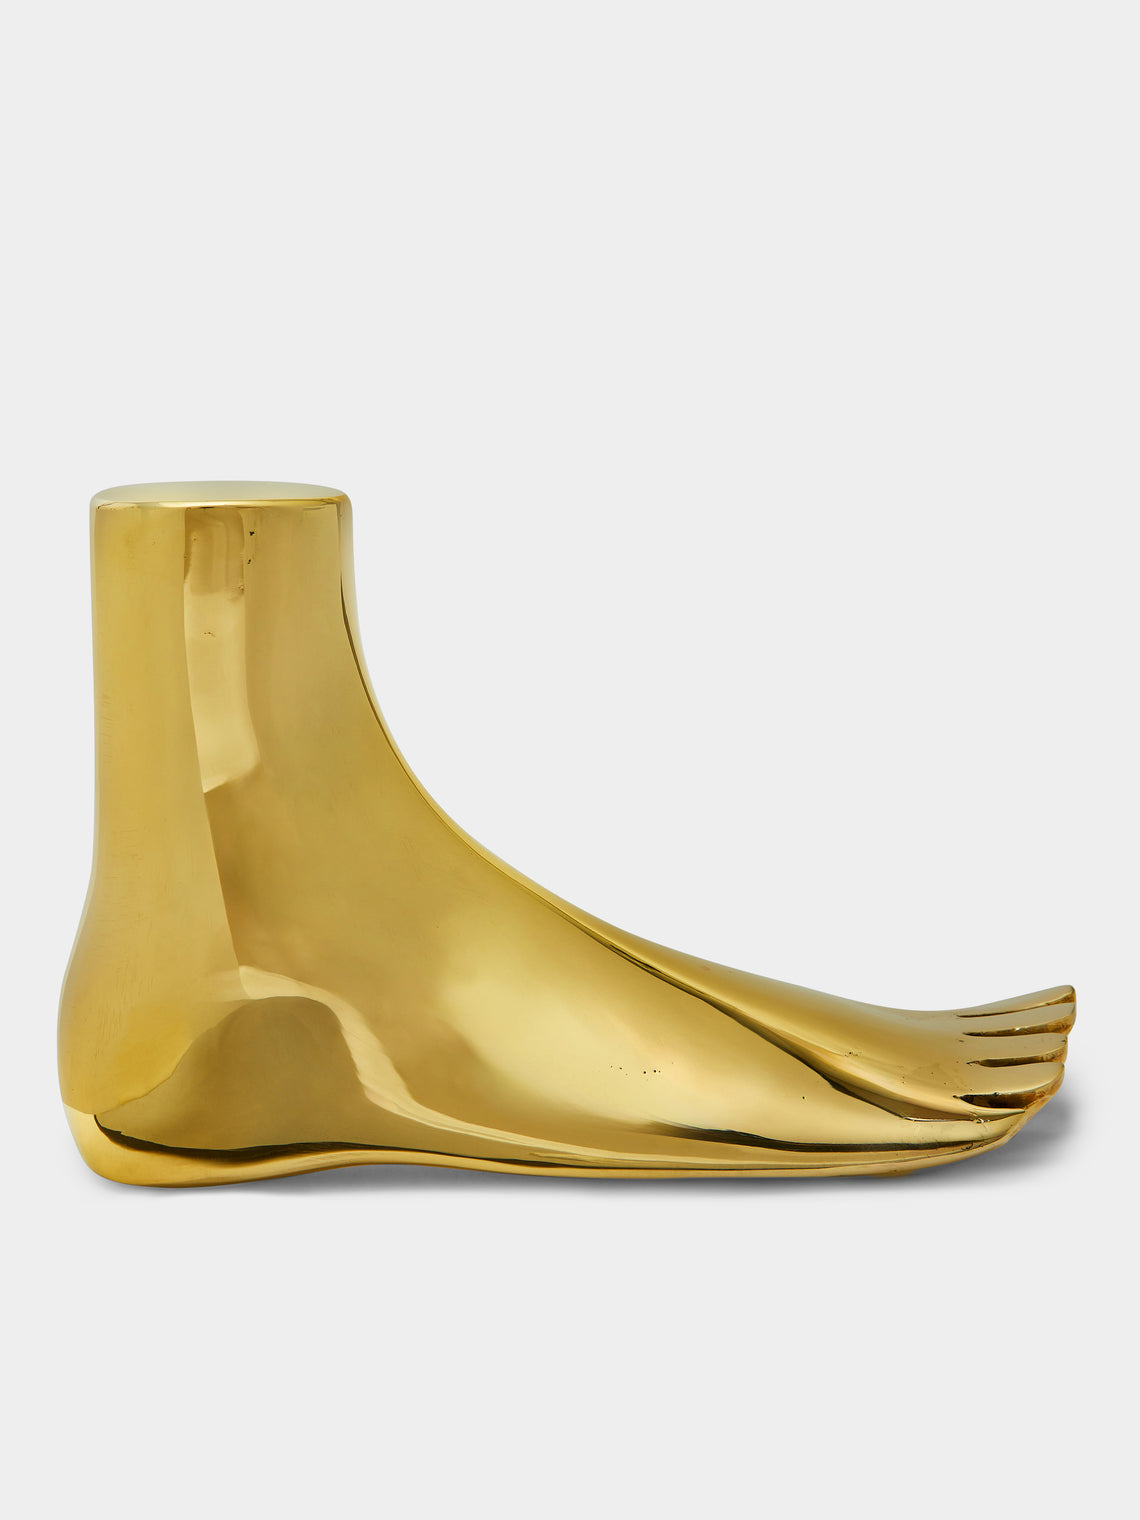 Carl Auböck - Brass Oversized Foot - Gold - ABASK - 